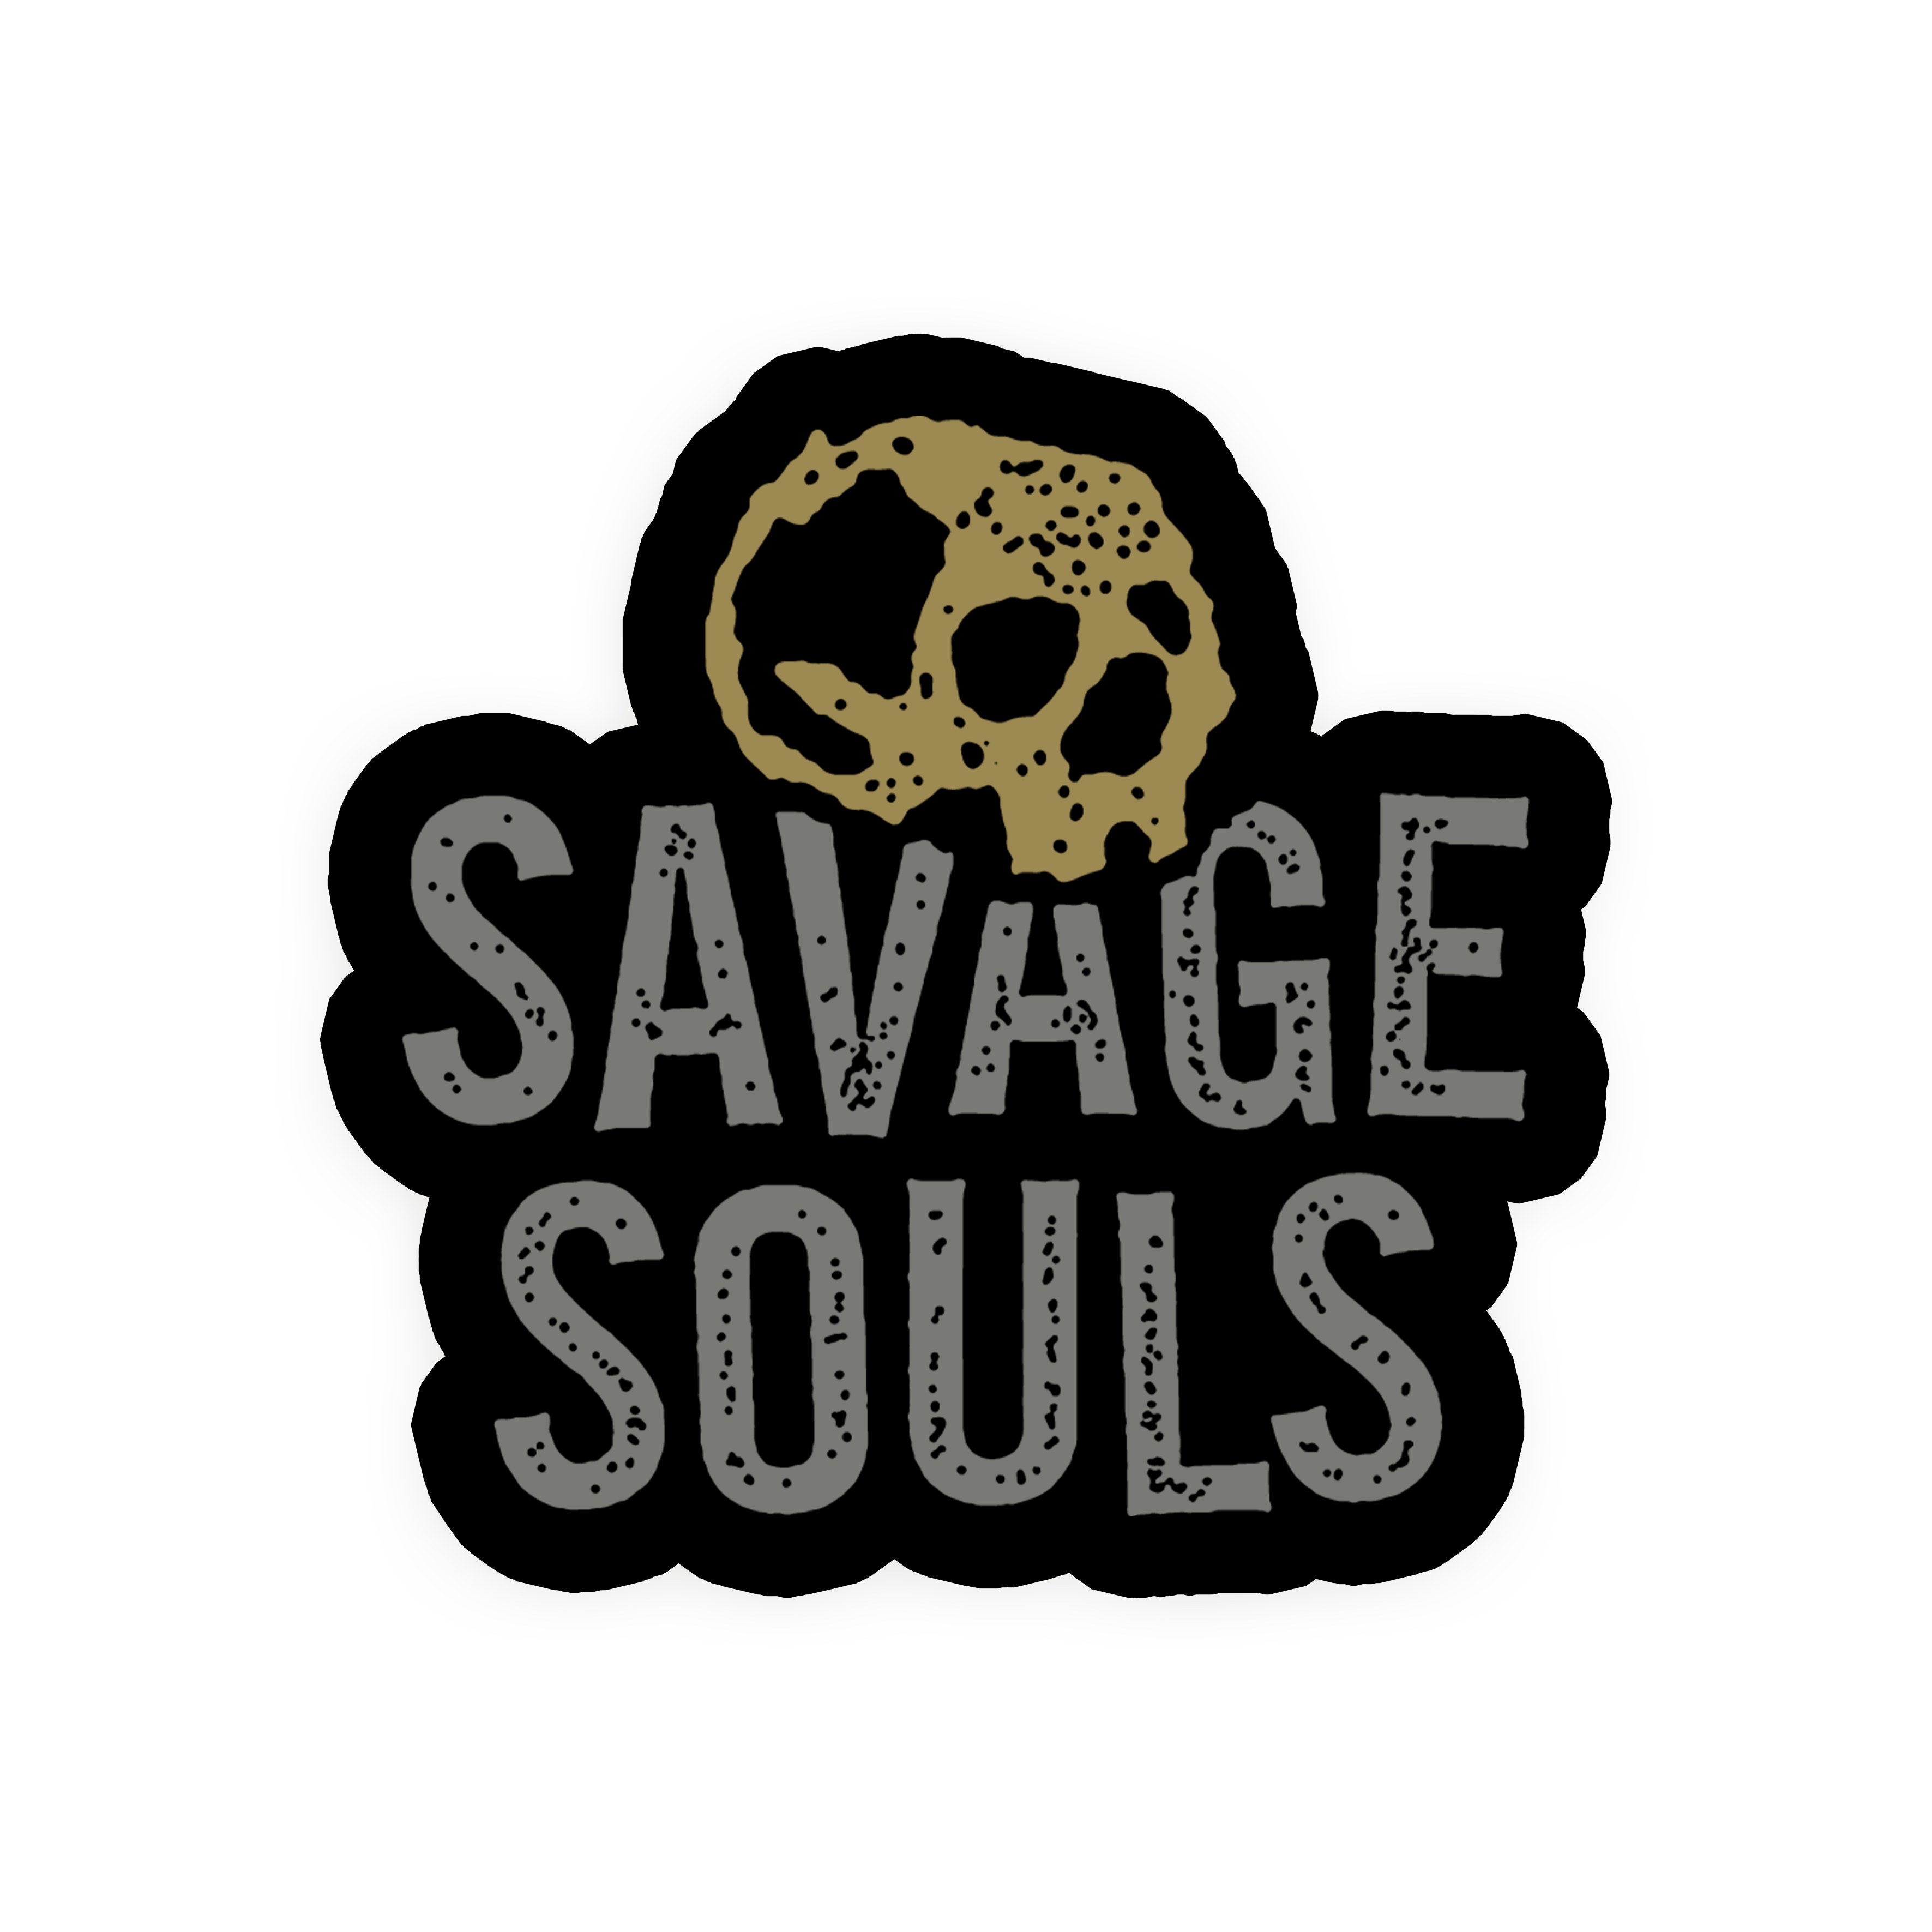 Savage Souls Sticker